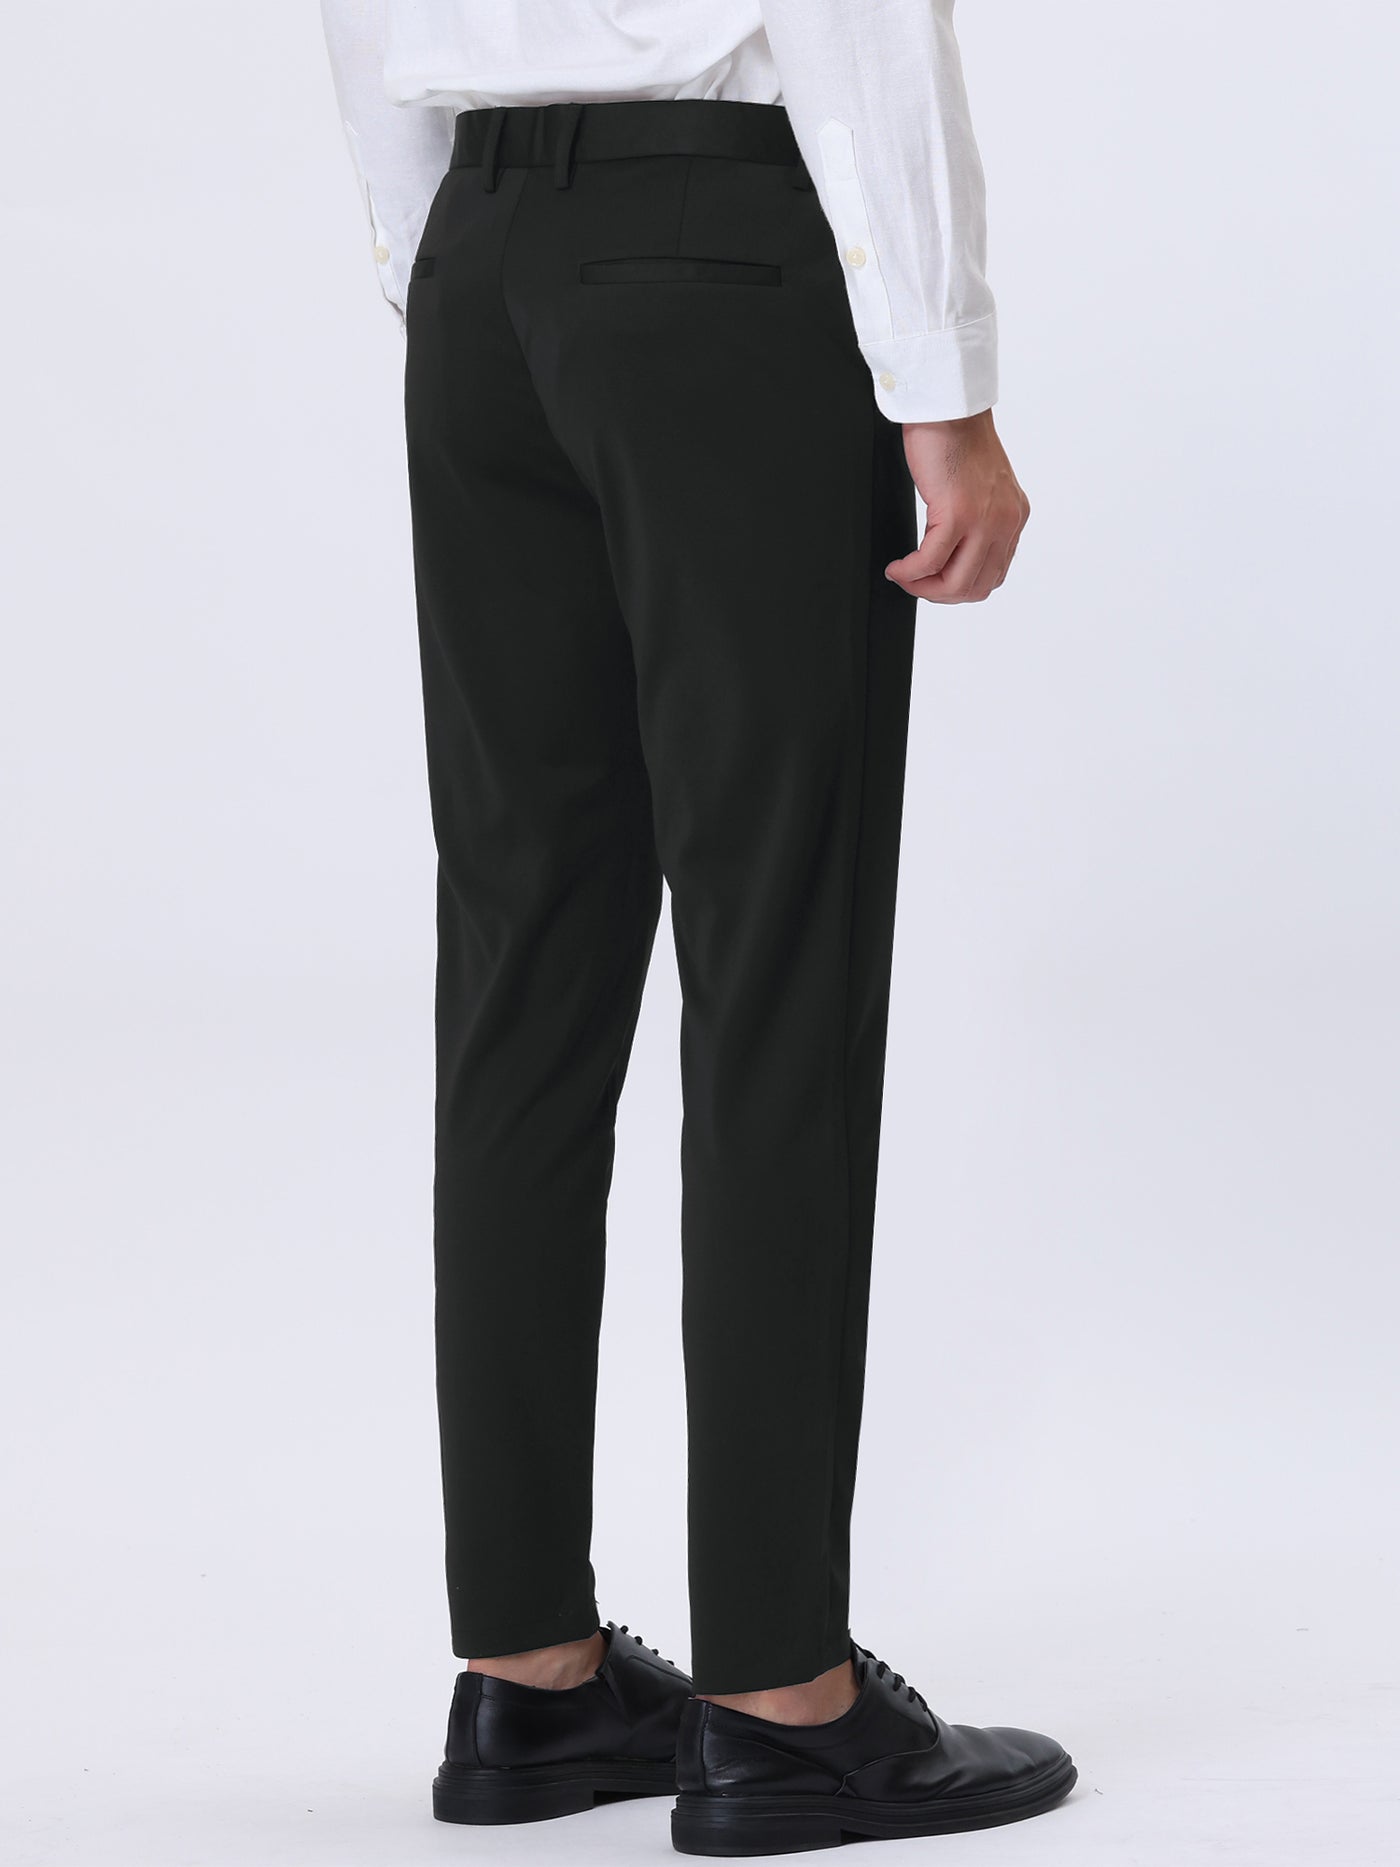 Bublédon Men's Cropped Dress Pants Flat Front Office Solid Color Trousers